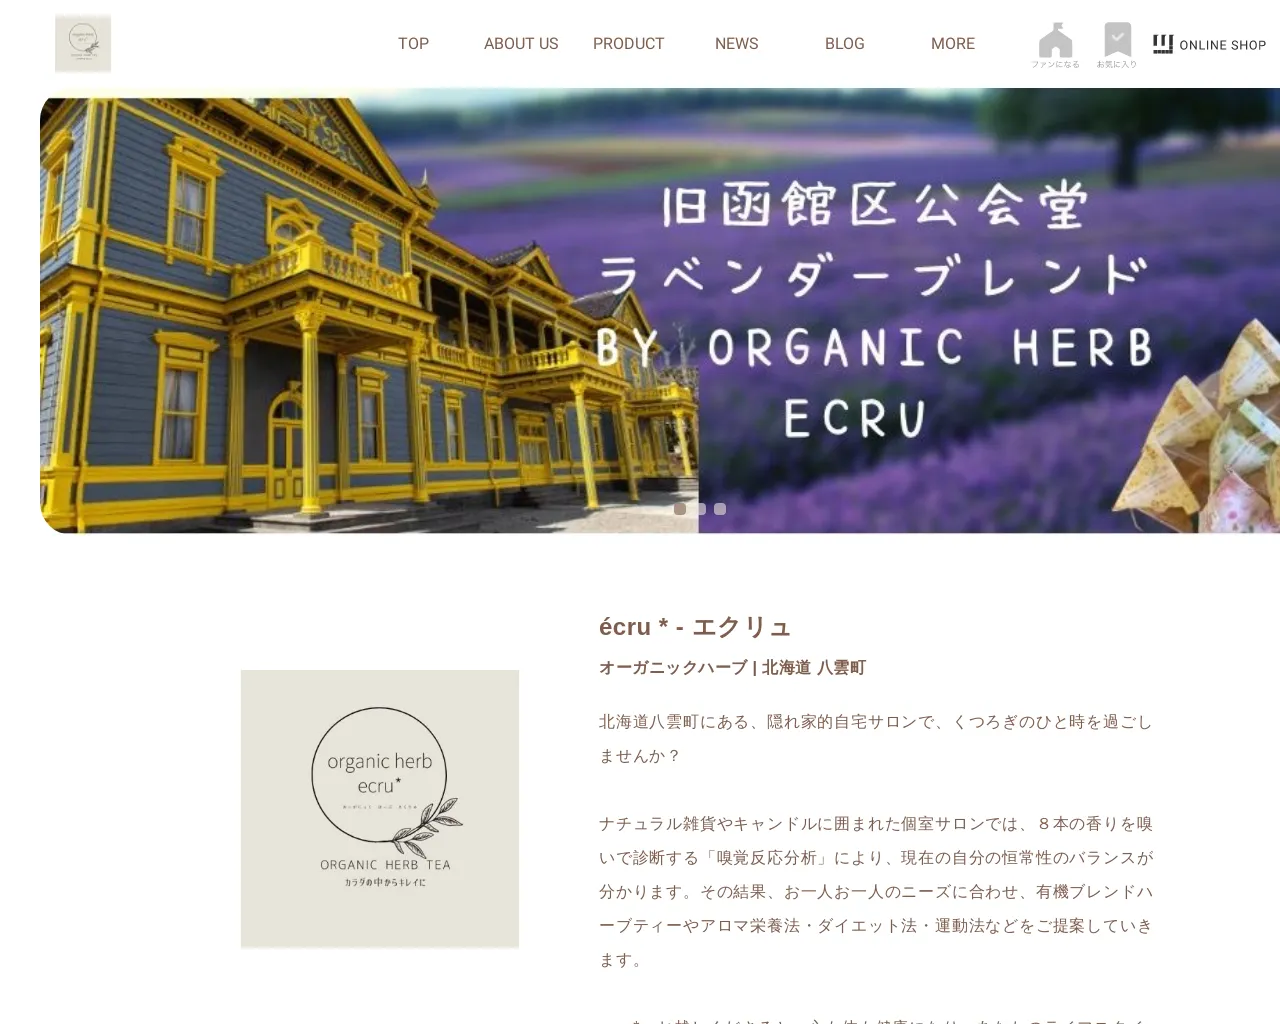 Hideaway Salon Ecru ecru * Aroma and herbal tea site